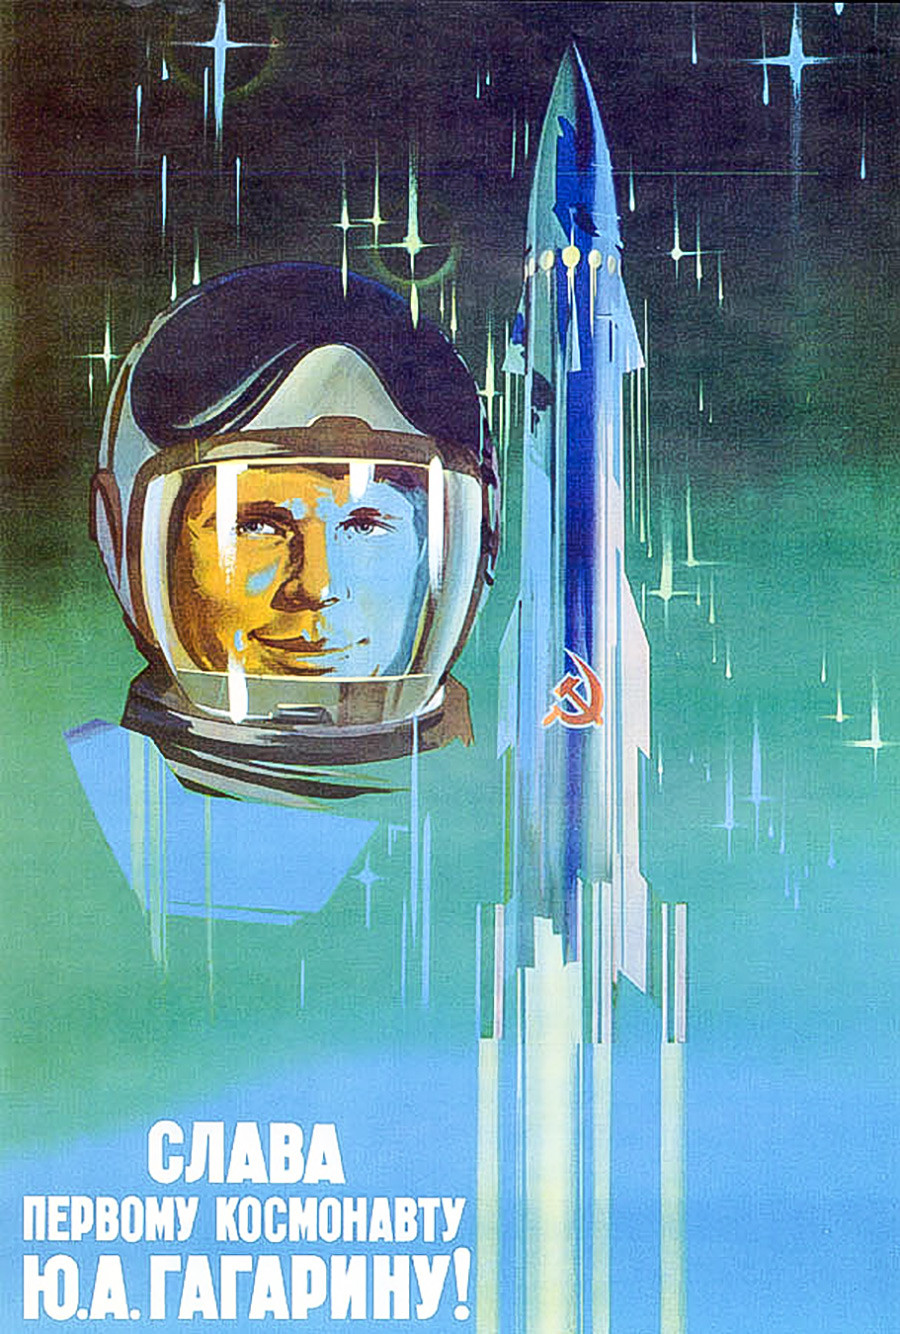 « Gloire au premier cosmonaute Iouri Gagarine ! »